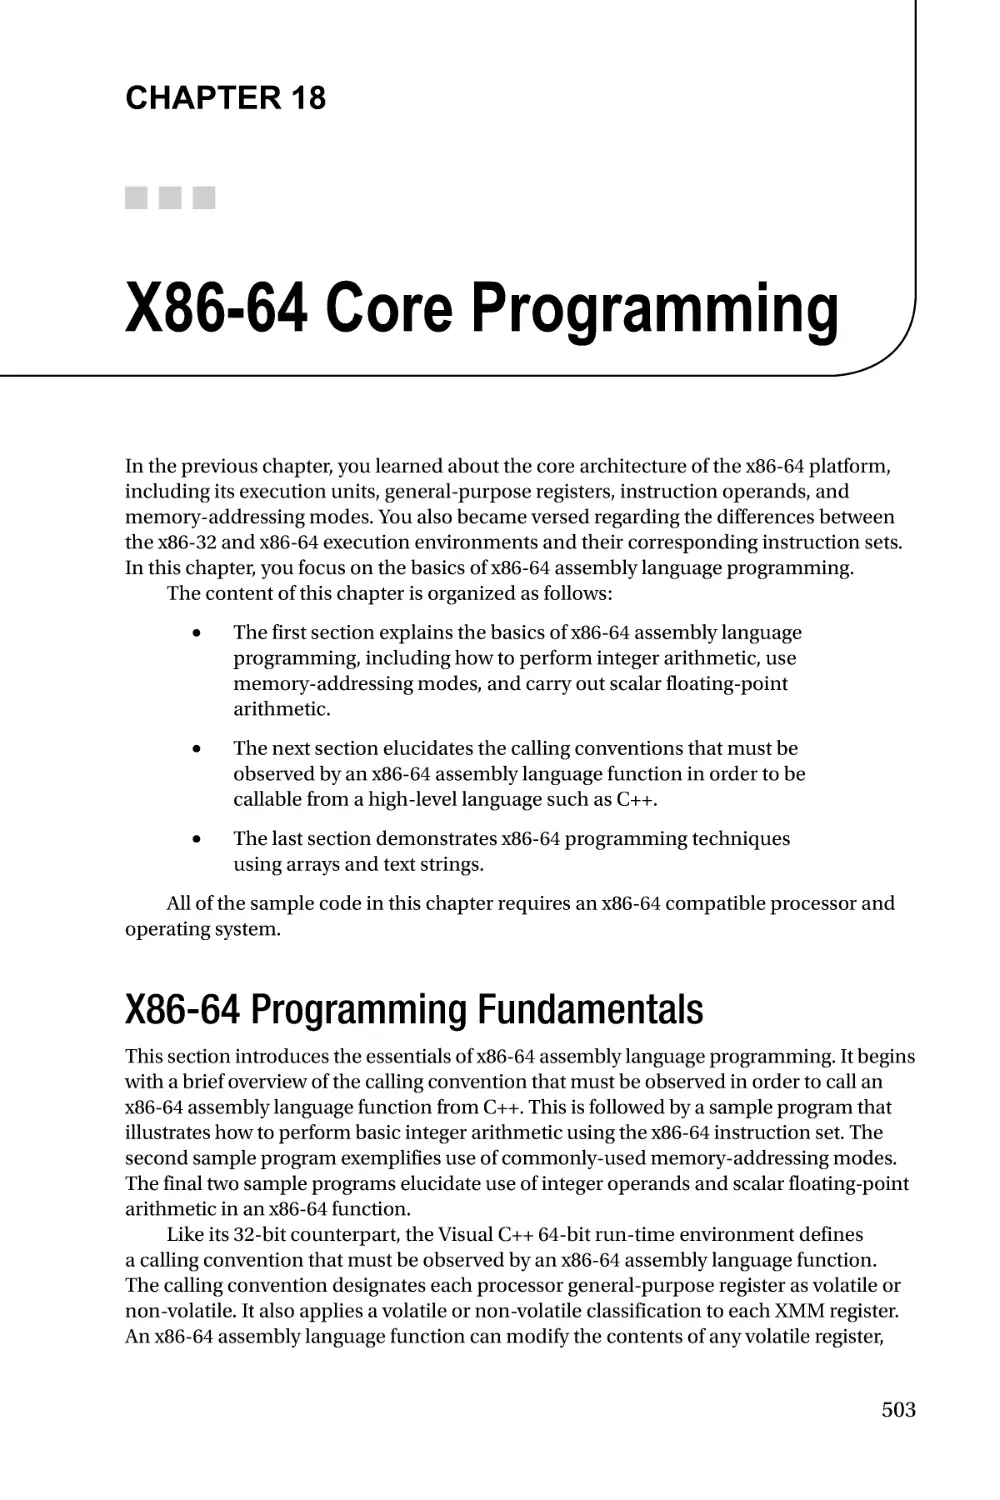 Chapter 18
X86-64 Programming Fundamentals